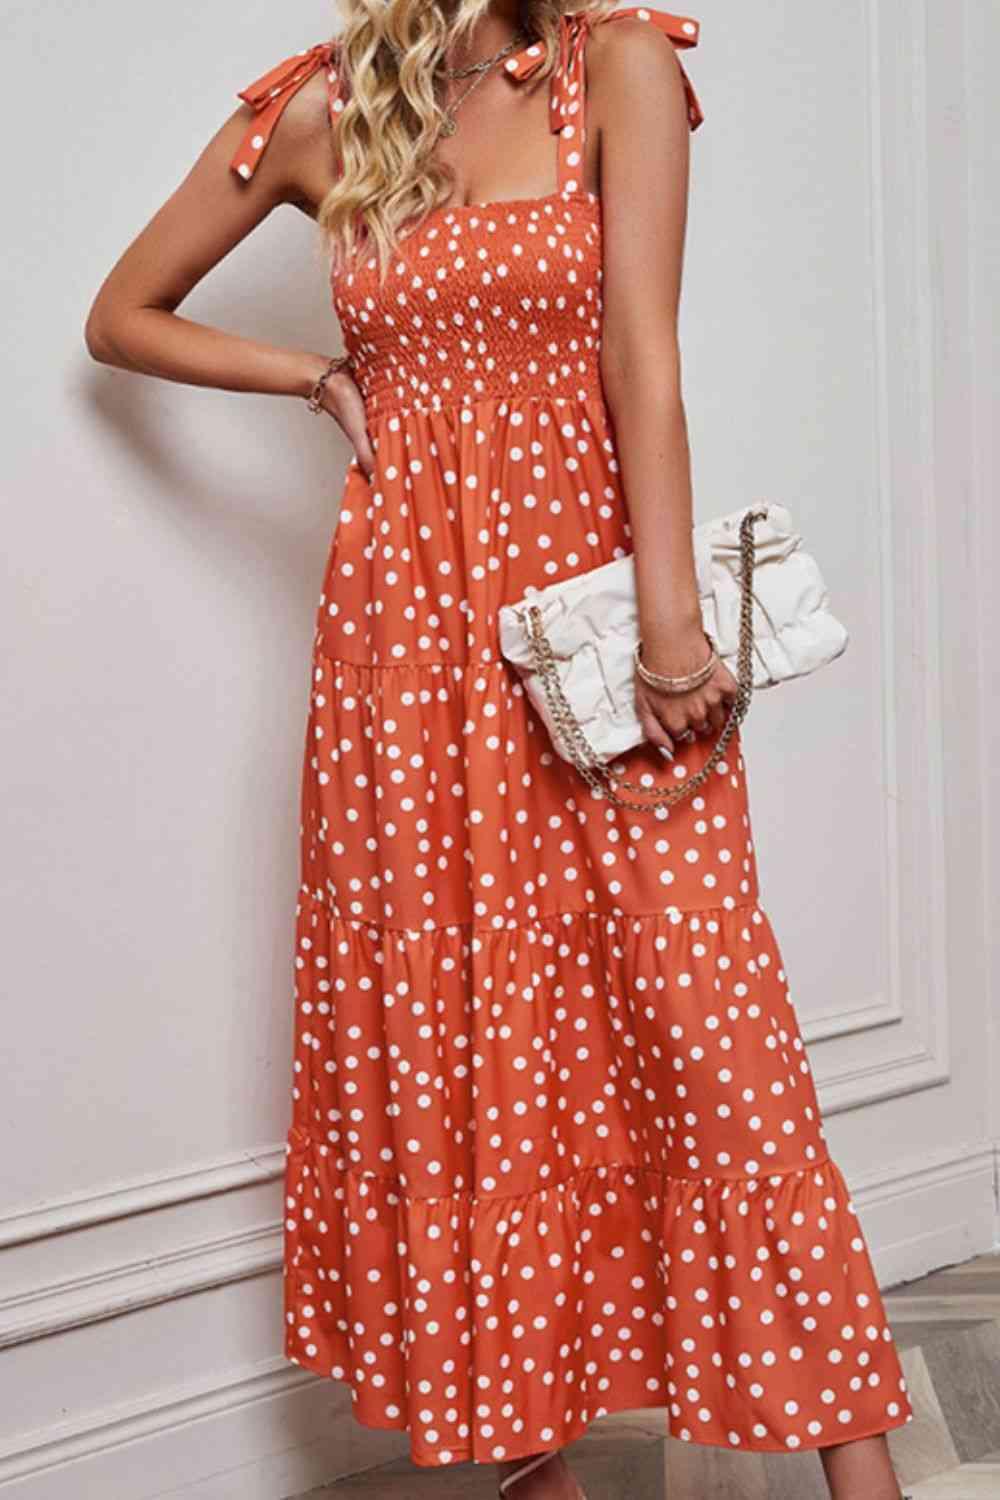 a woman in an orange polka dot dress